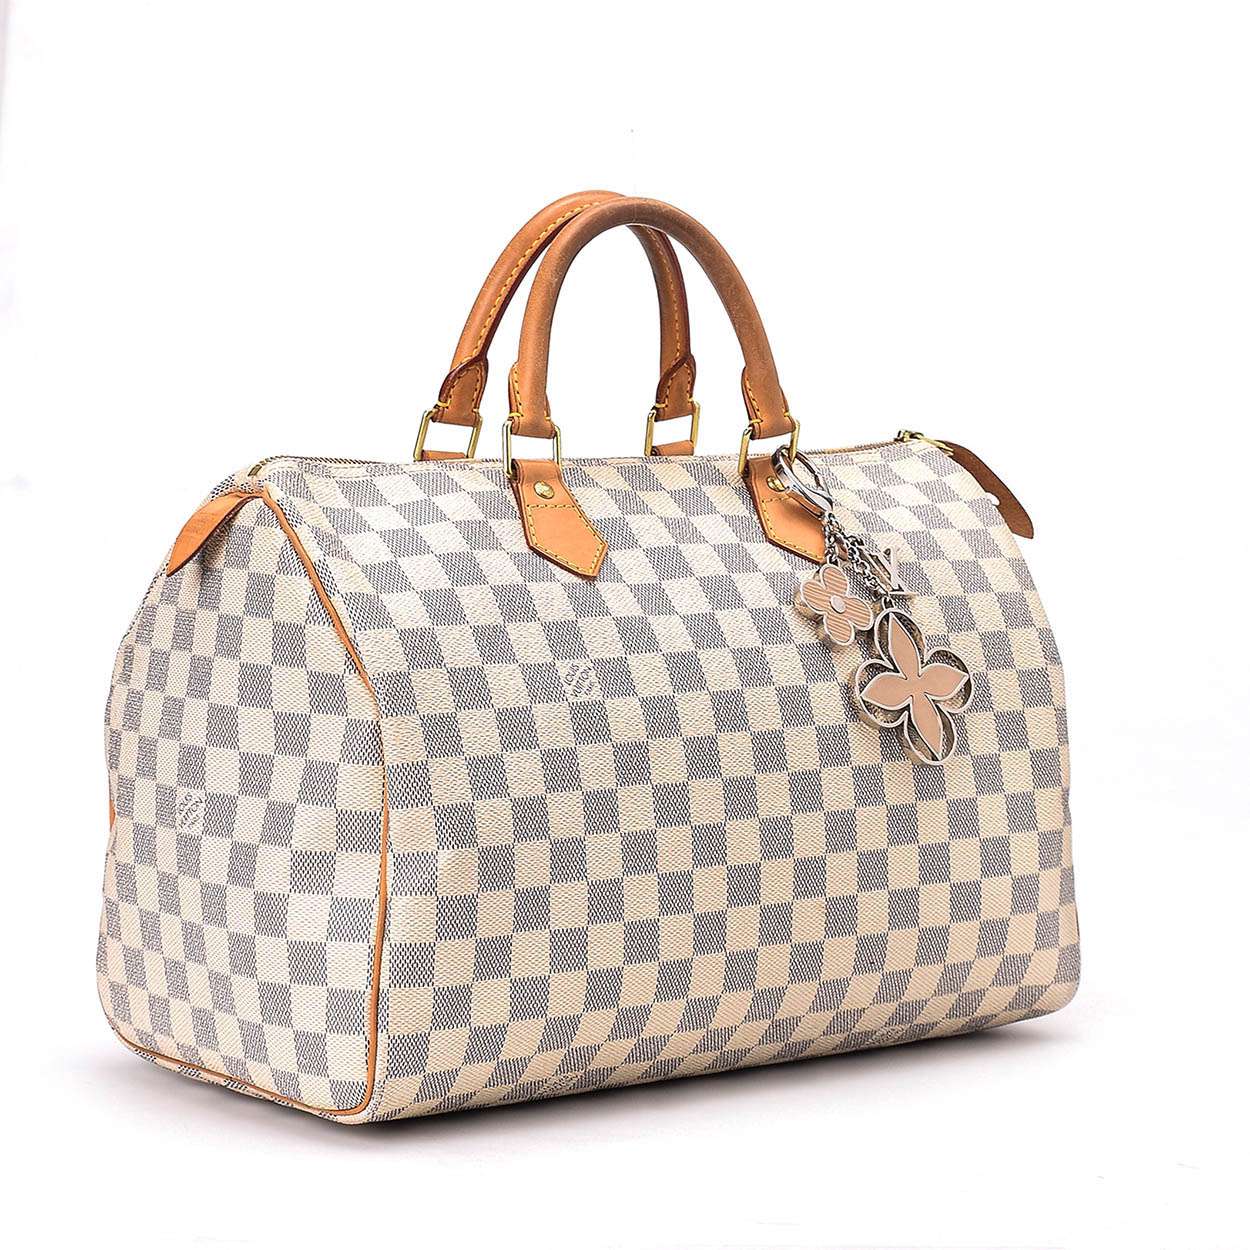 Louis Vuitton - Damier Azur Canvas Speedy 35 Bag